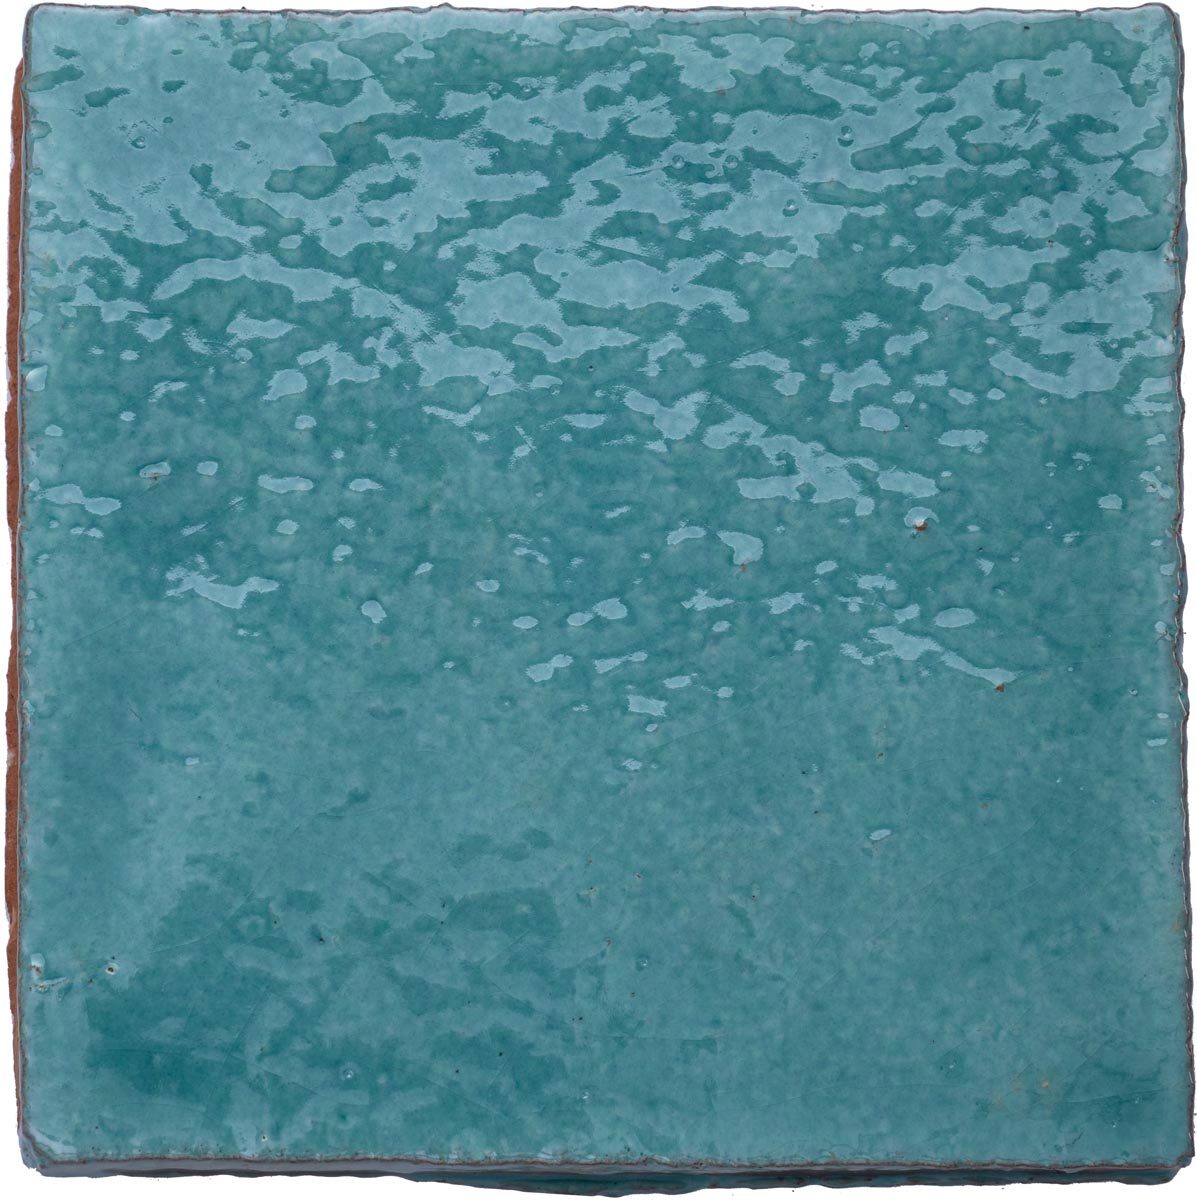 Seafoam Square, product variant image